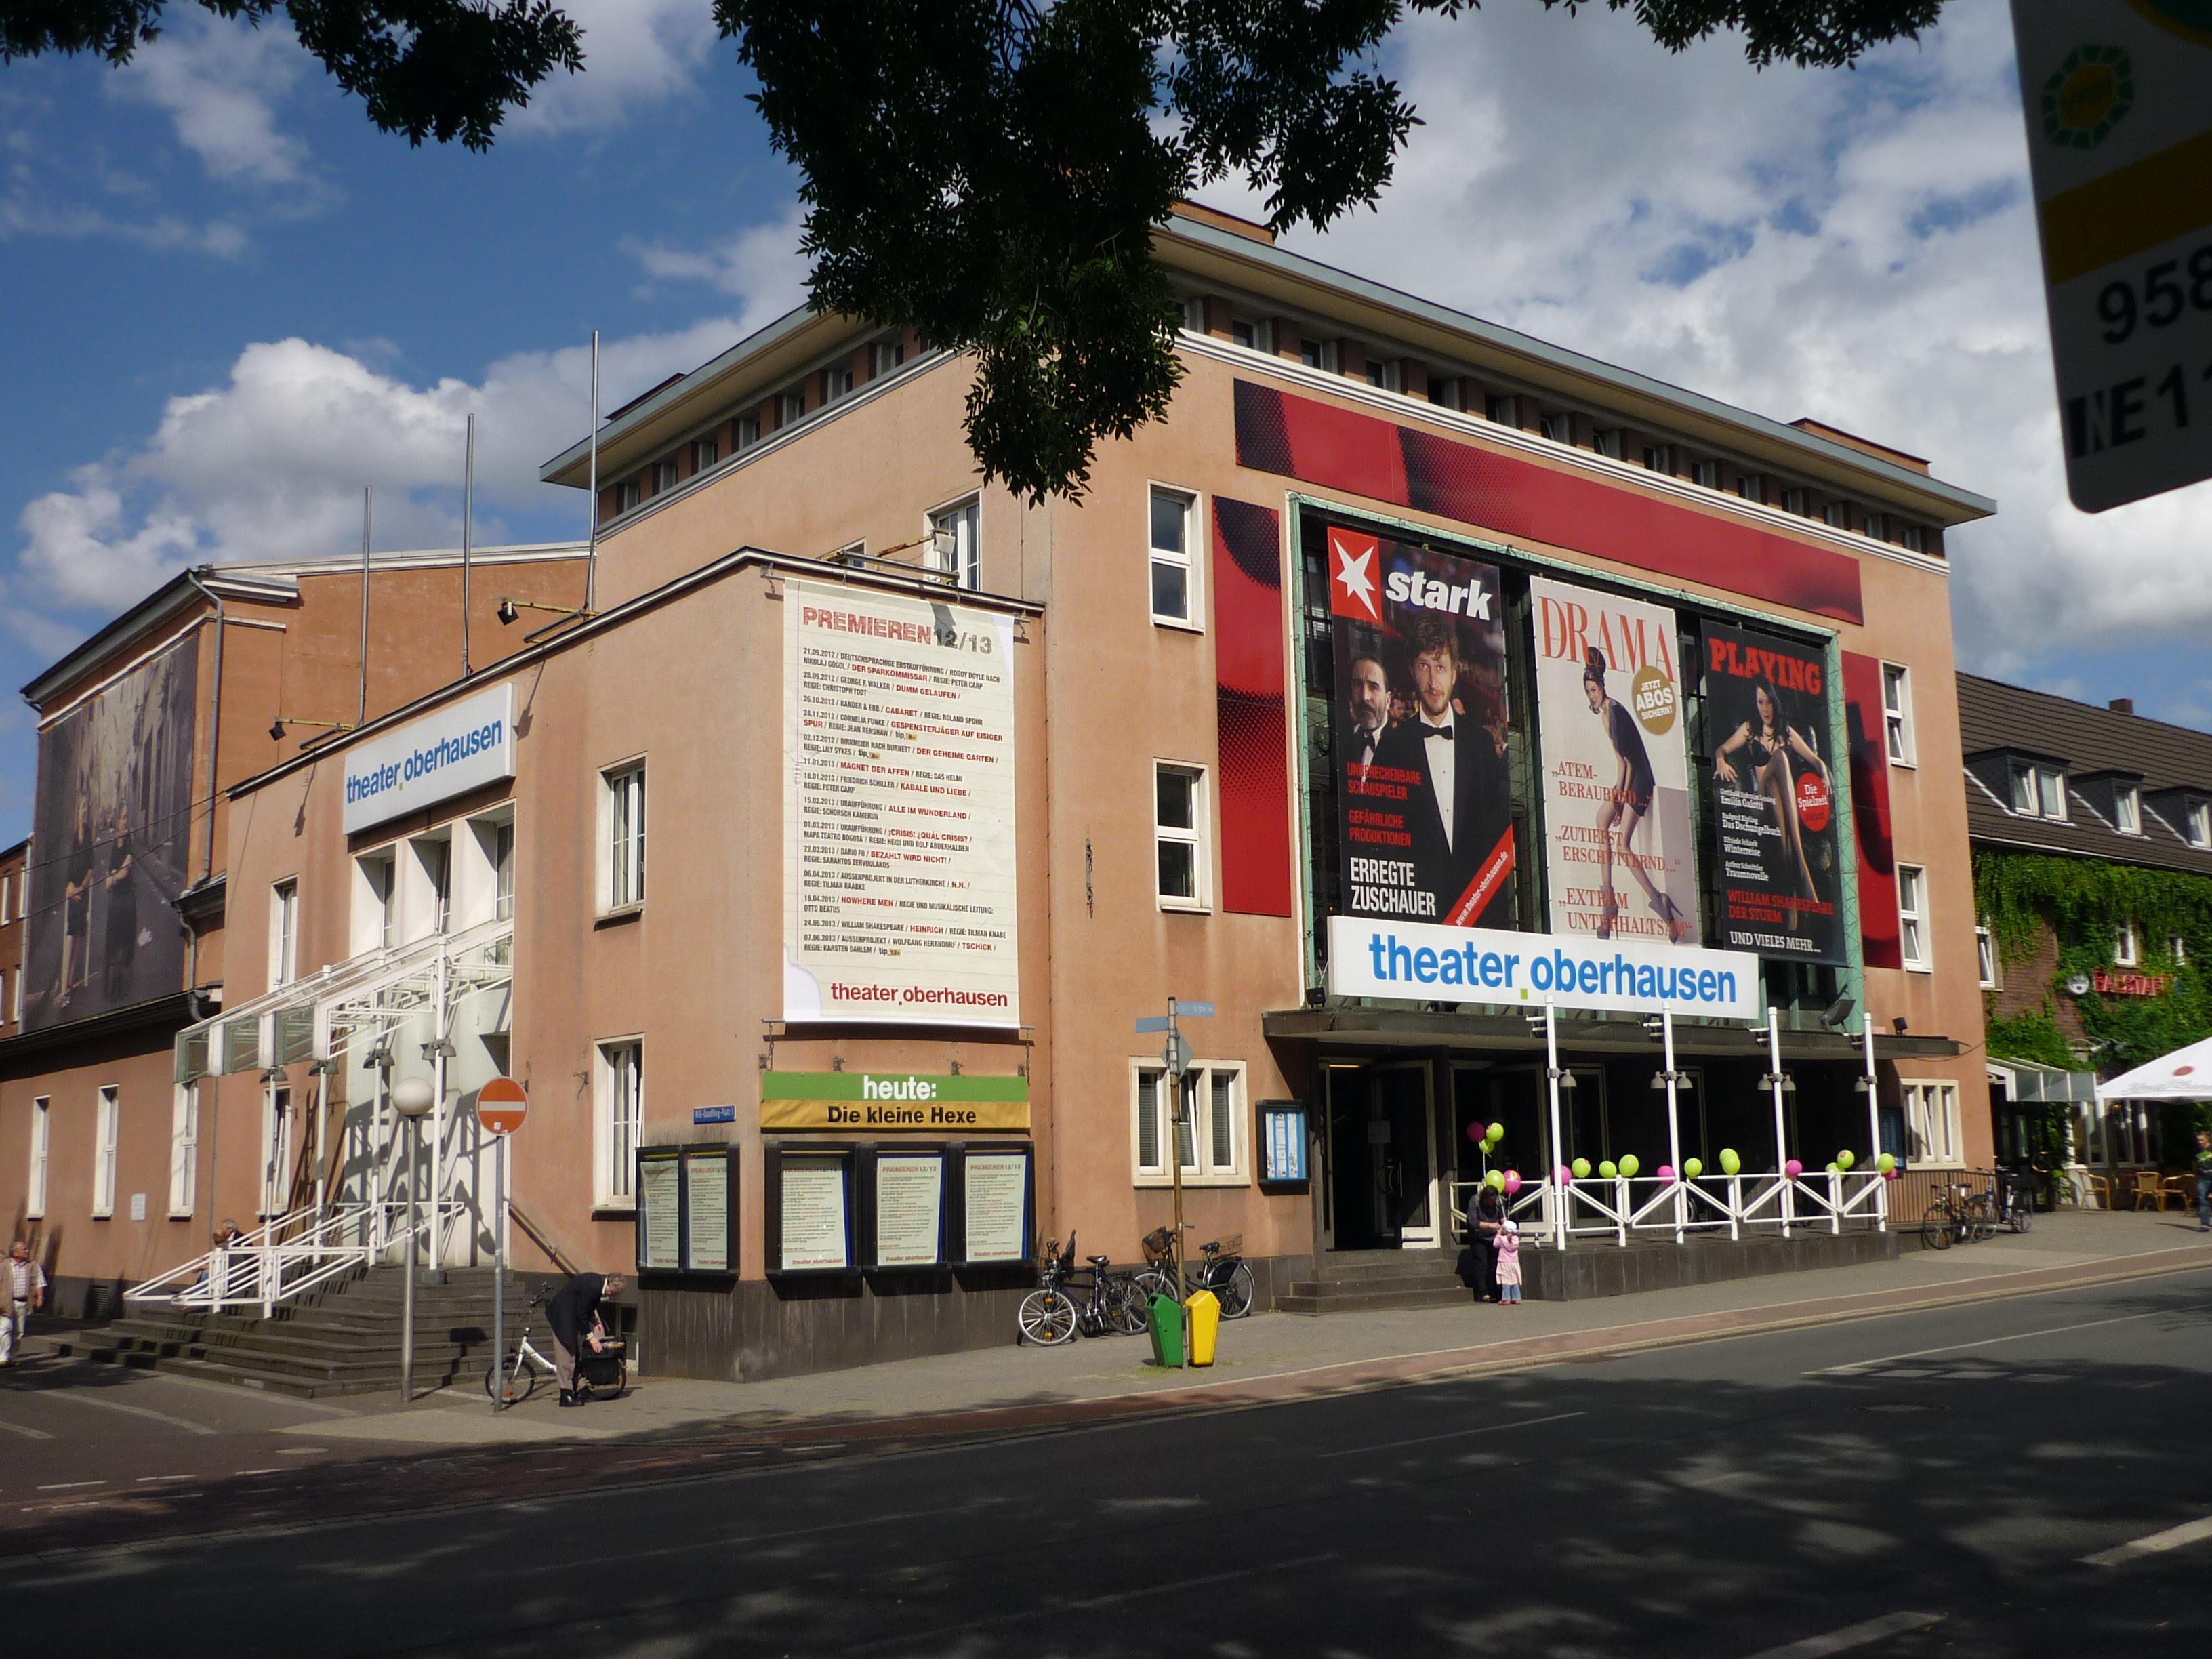 Theater Oberhausen (August 2012)